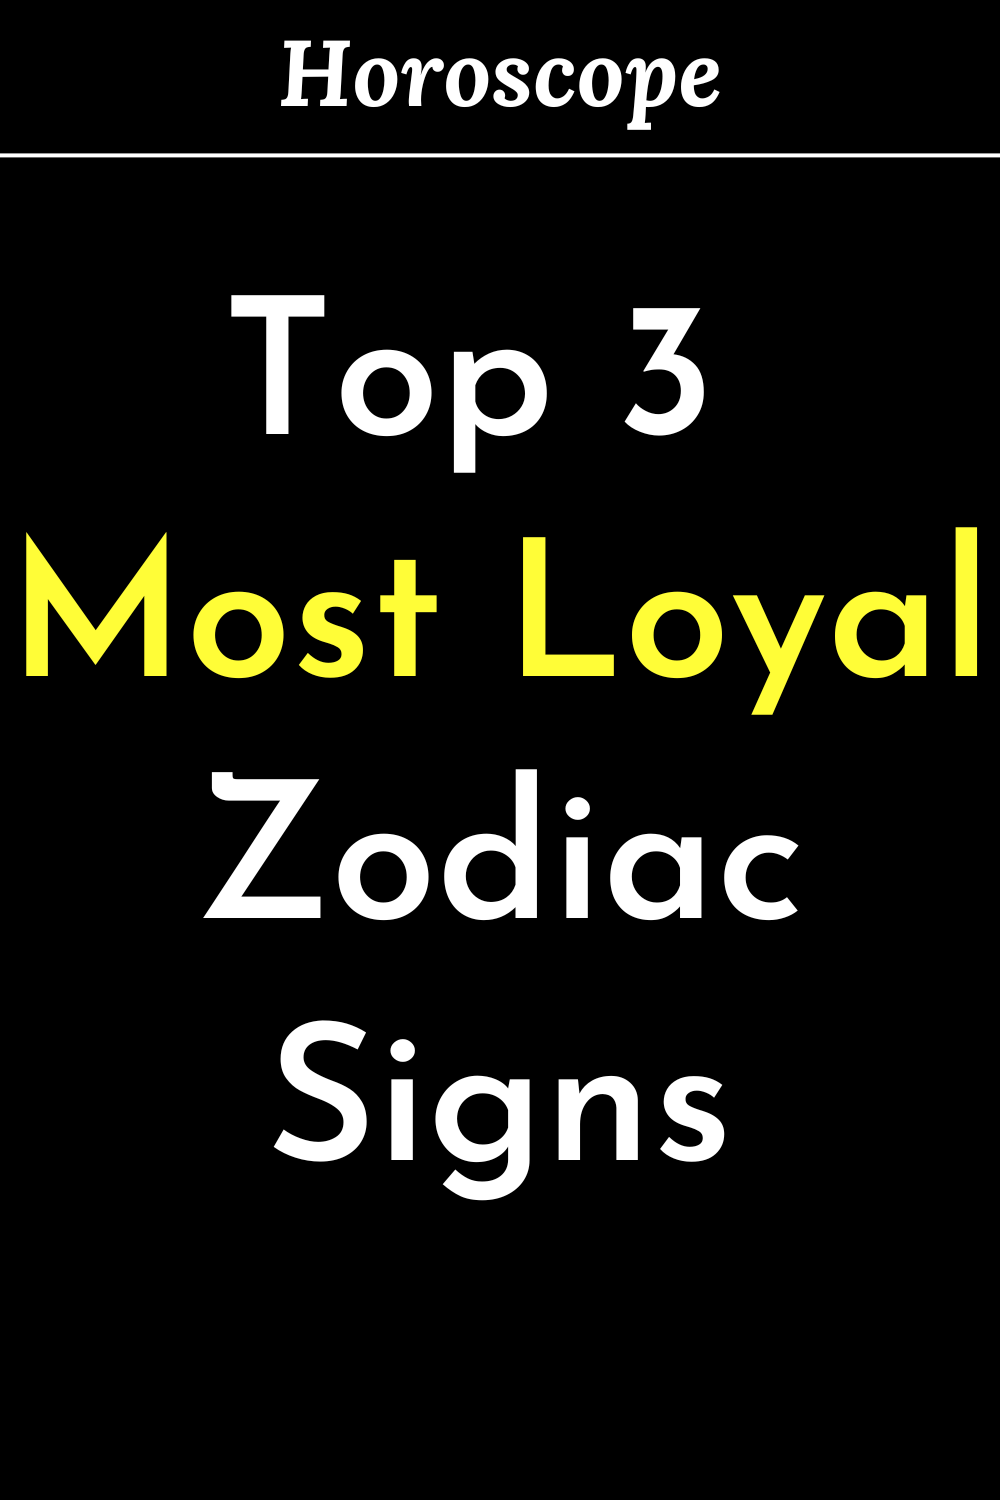 Top 3 Most Loyal Zodiac Signs